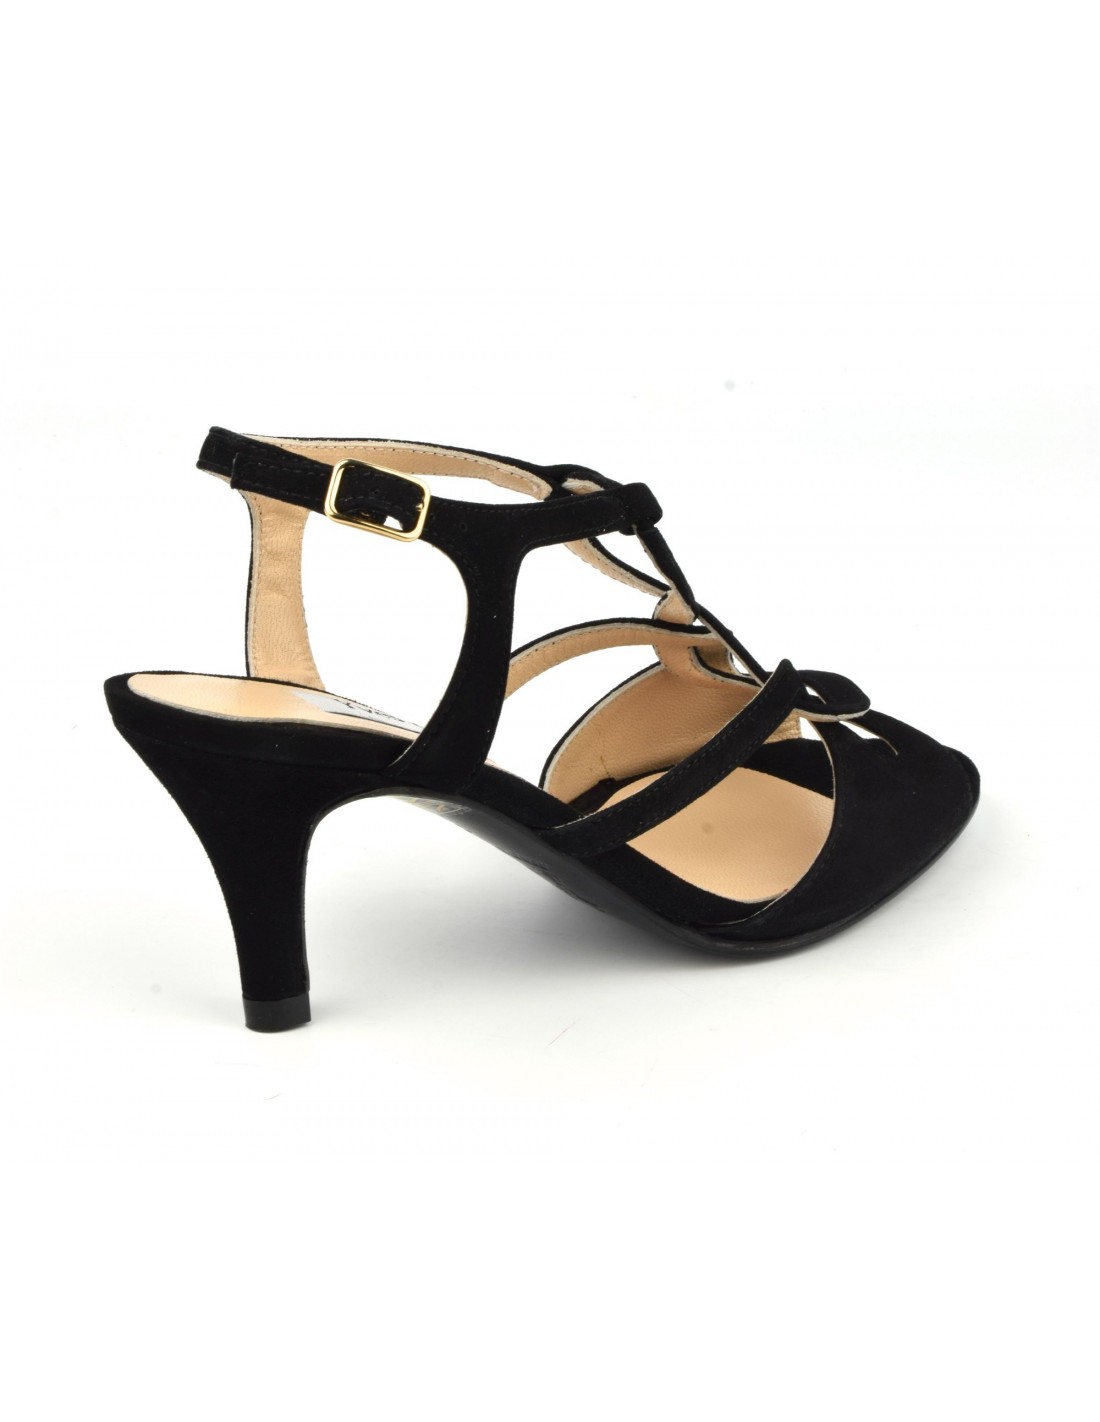 Barefoot sandals, black suede leather, MI-502, Yves de Beaumond